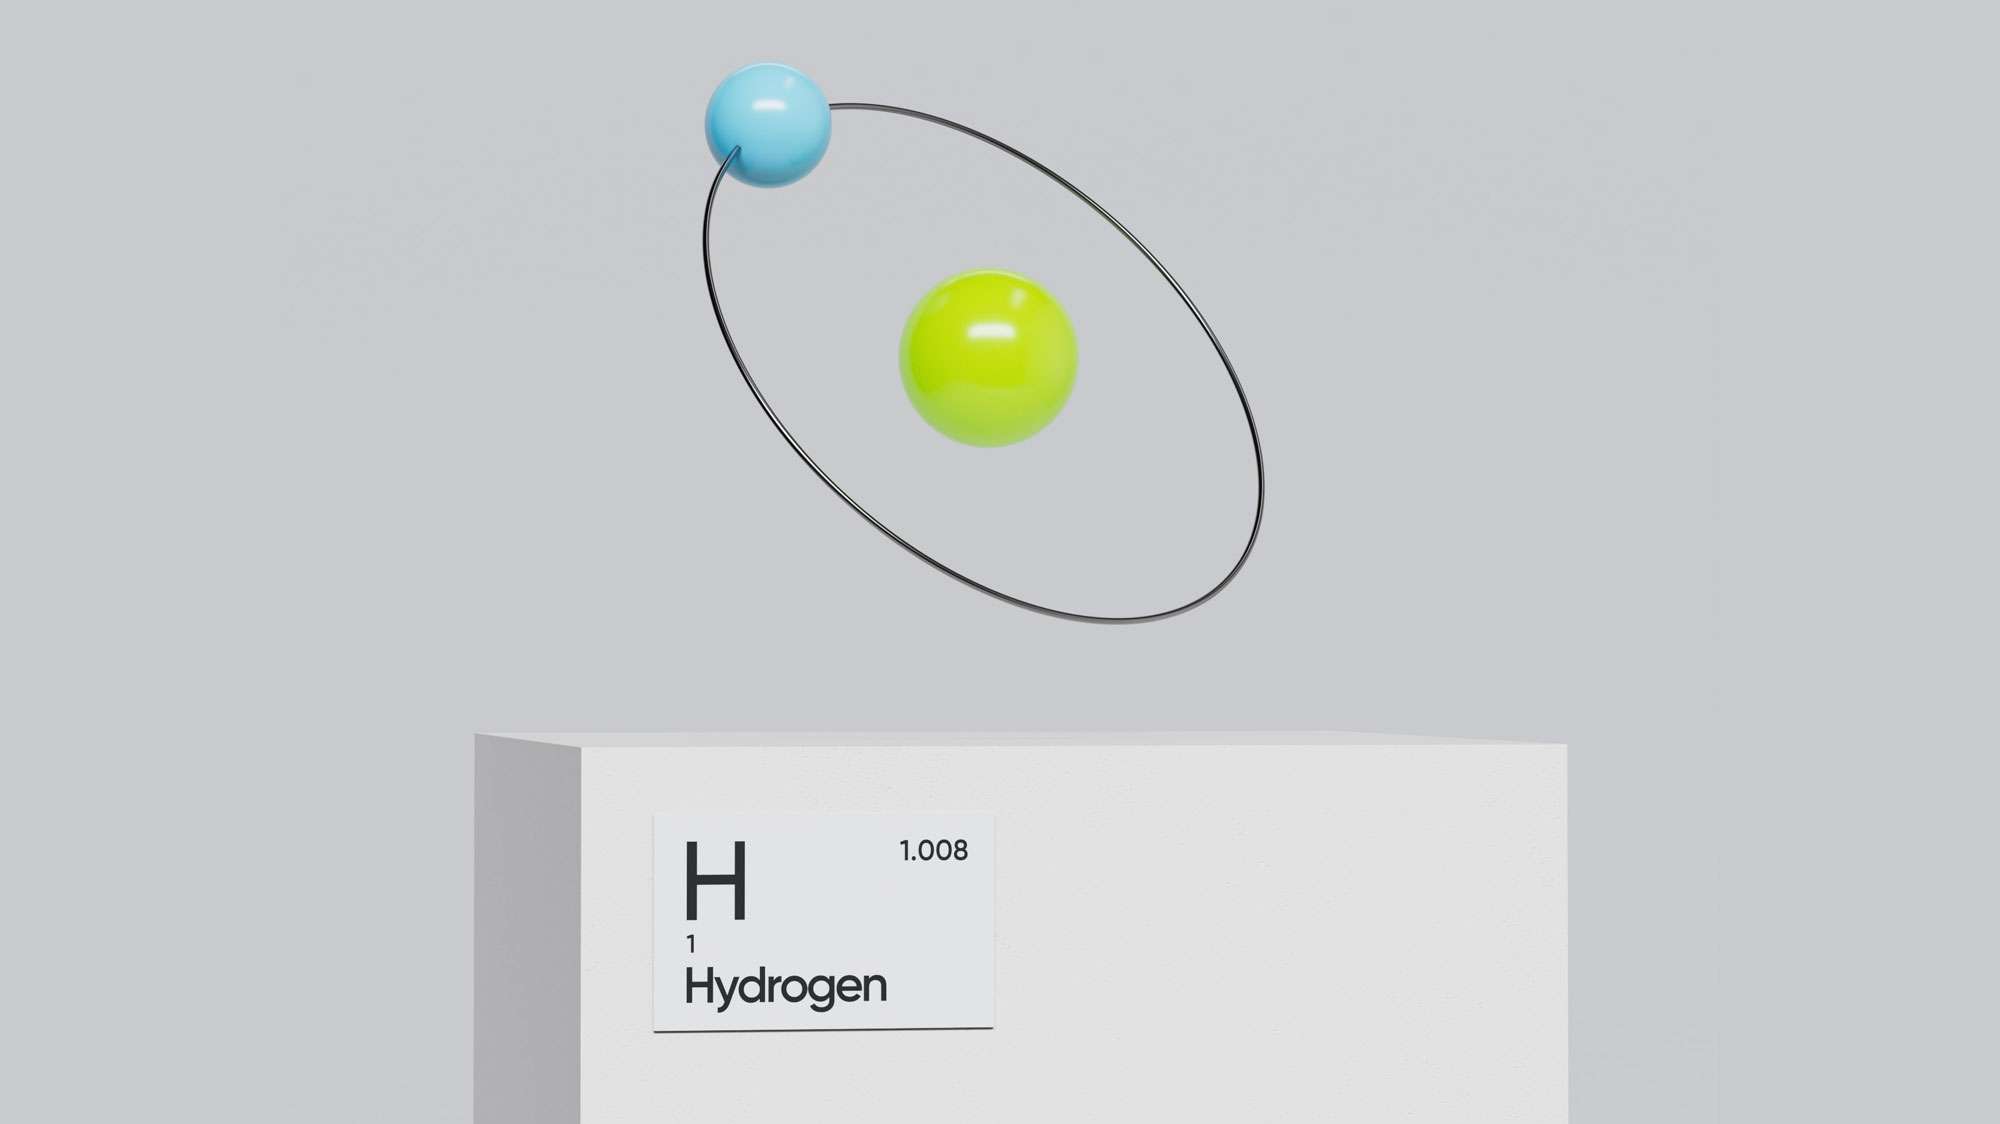 hydrogen5sRkk4rE59spq_2400x2400@2x